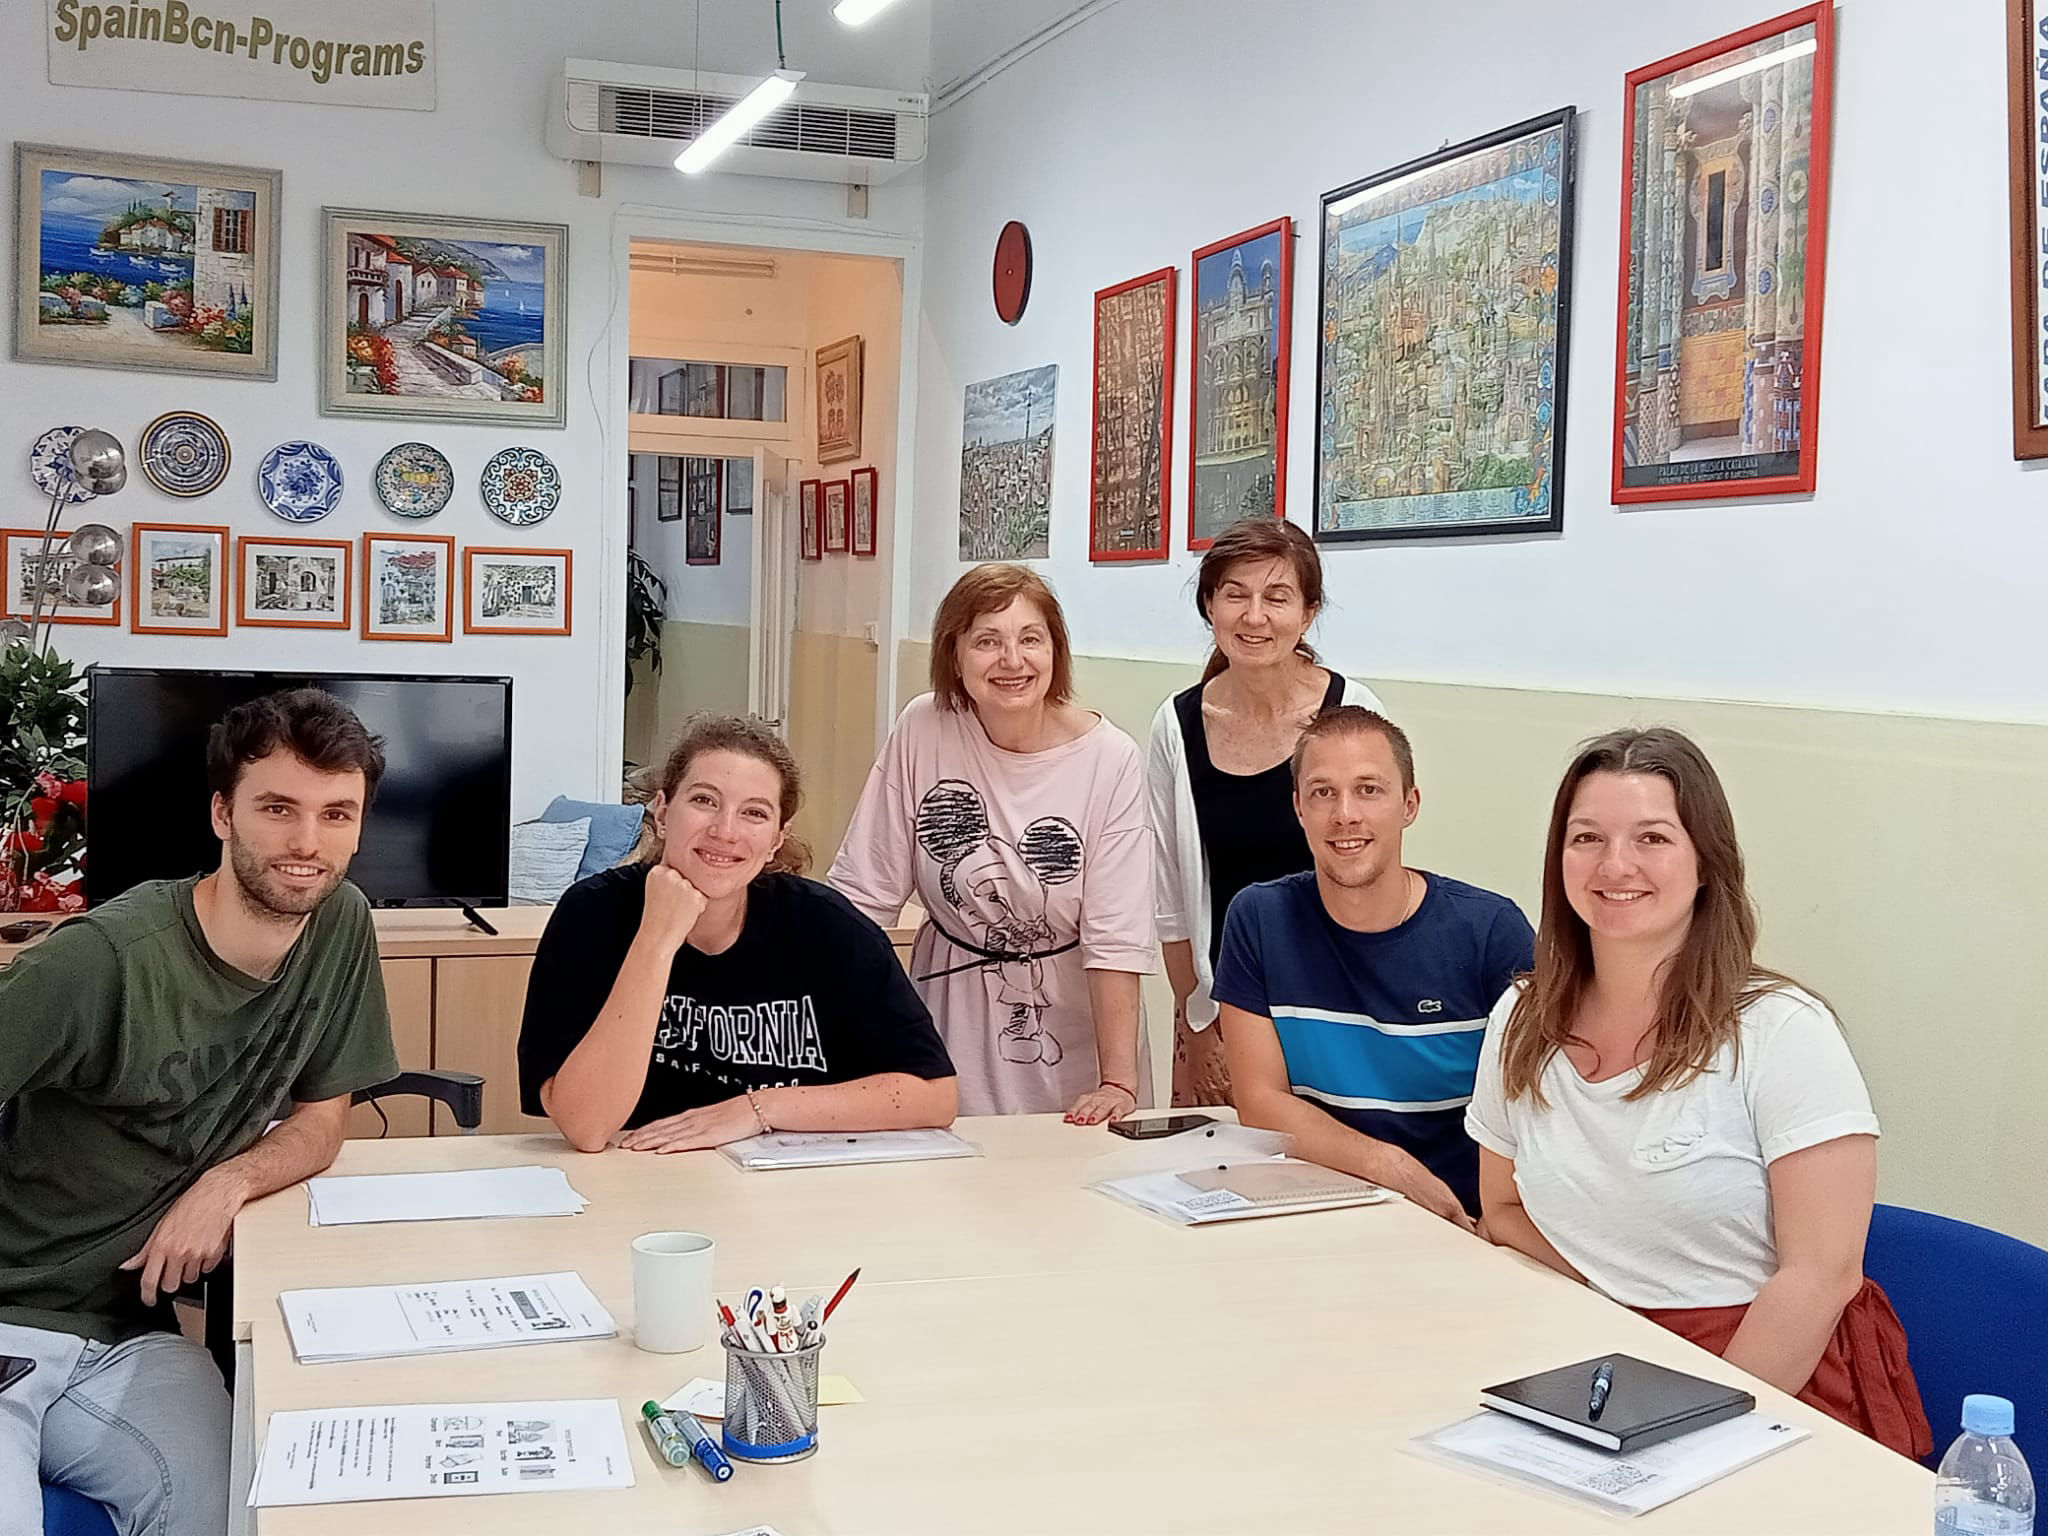 ICT course Staff week May 16 Barcelona, Spring 2022 SpainBcn-Programs Staff training Erasmus+ KA1